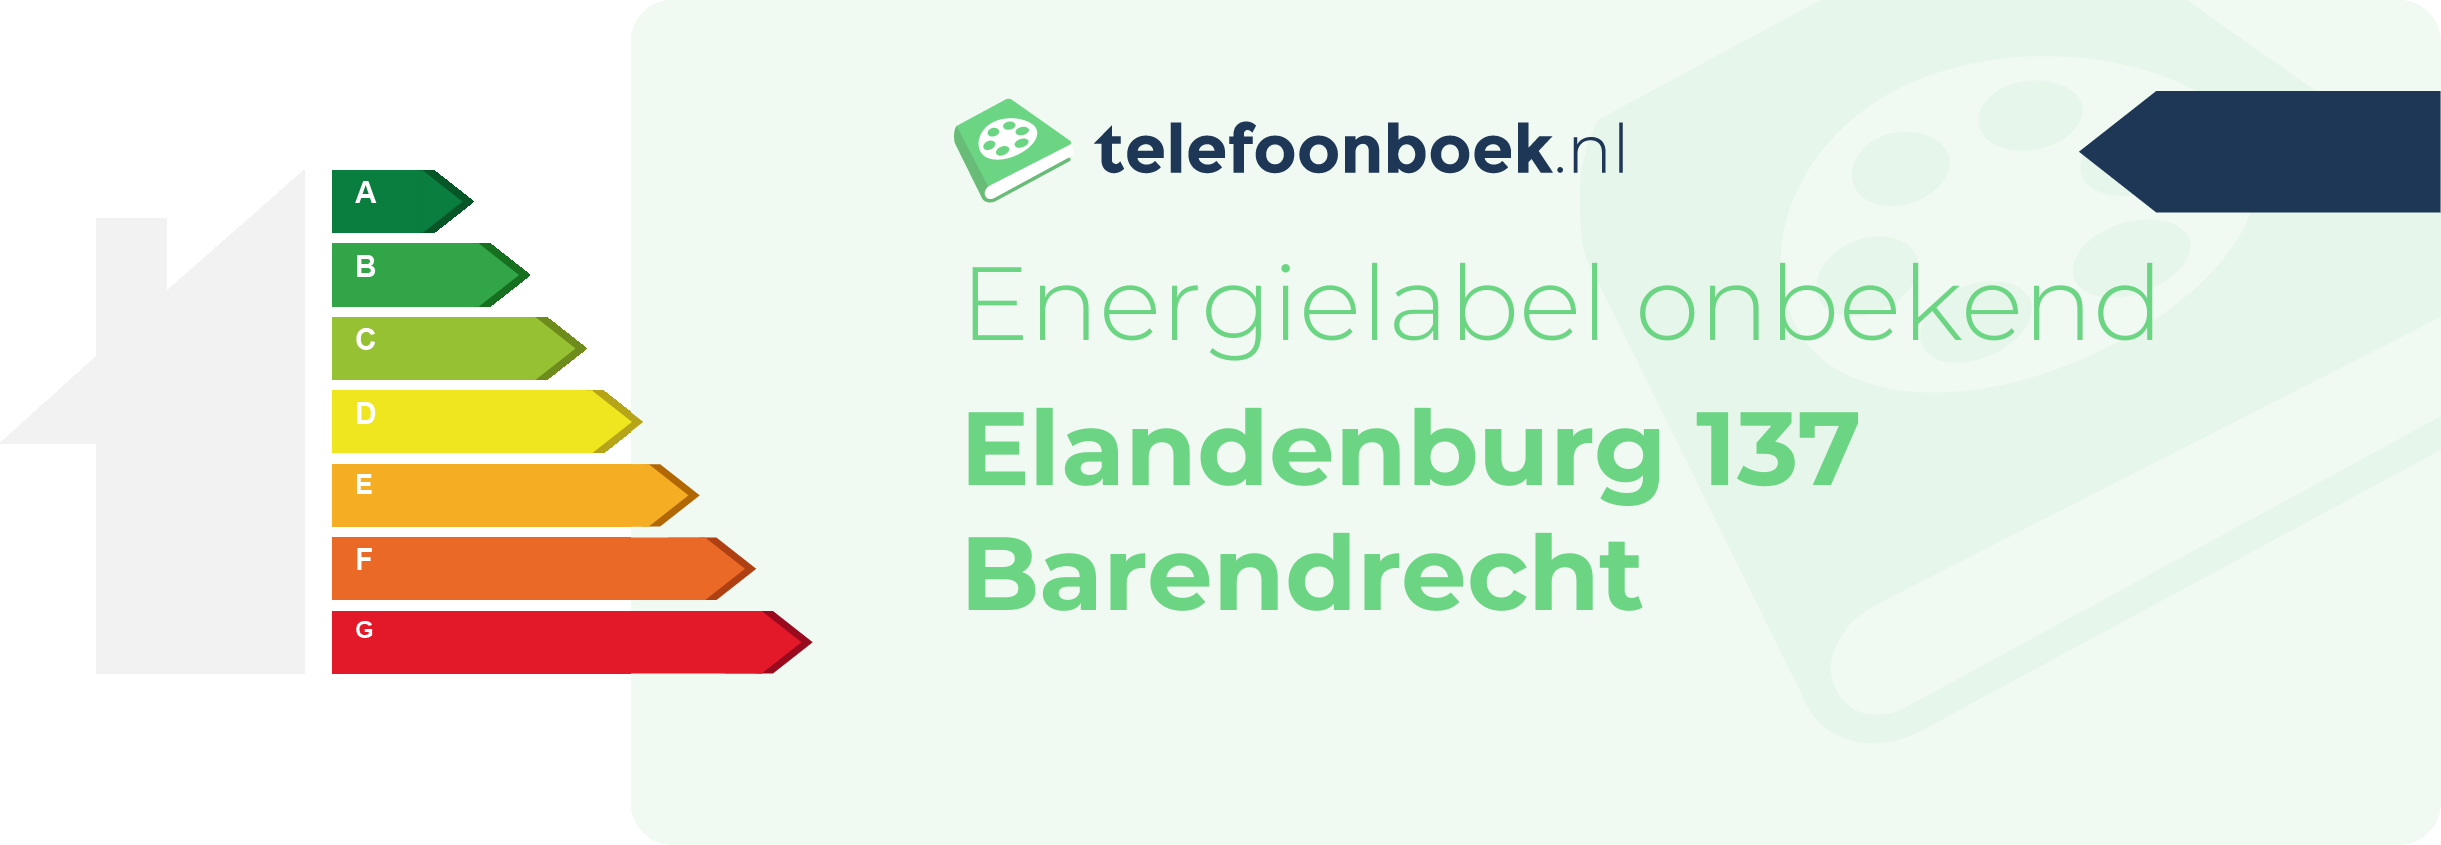 Energielabel Elandenburg 137 Barendrecht